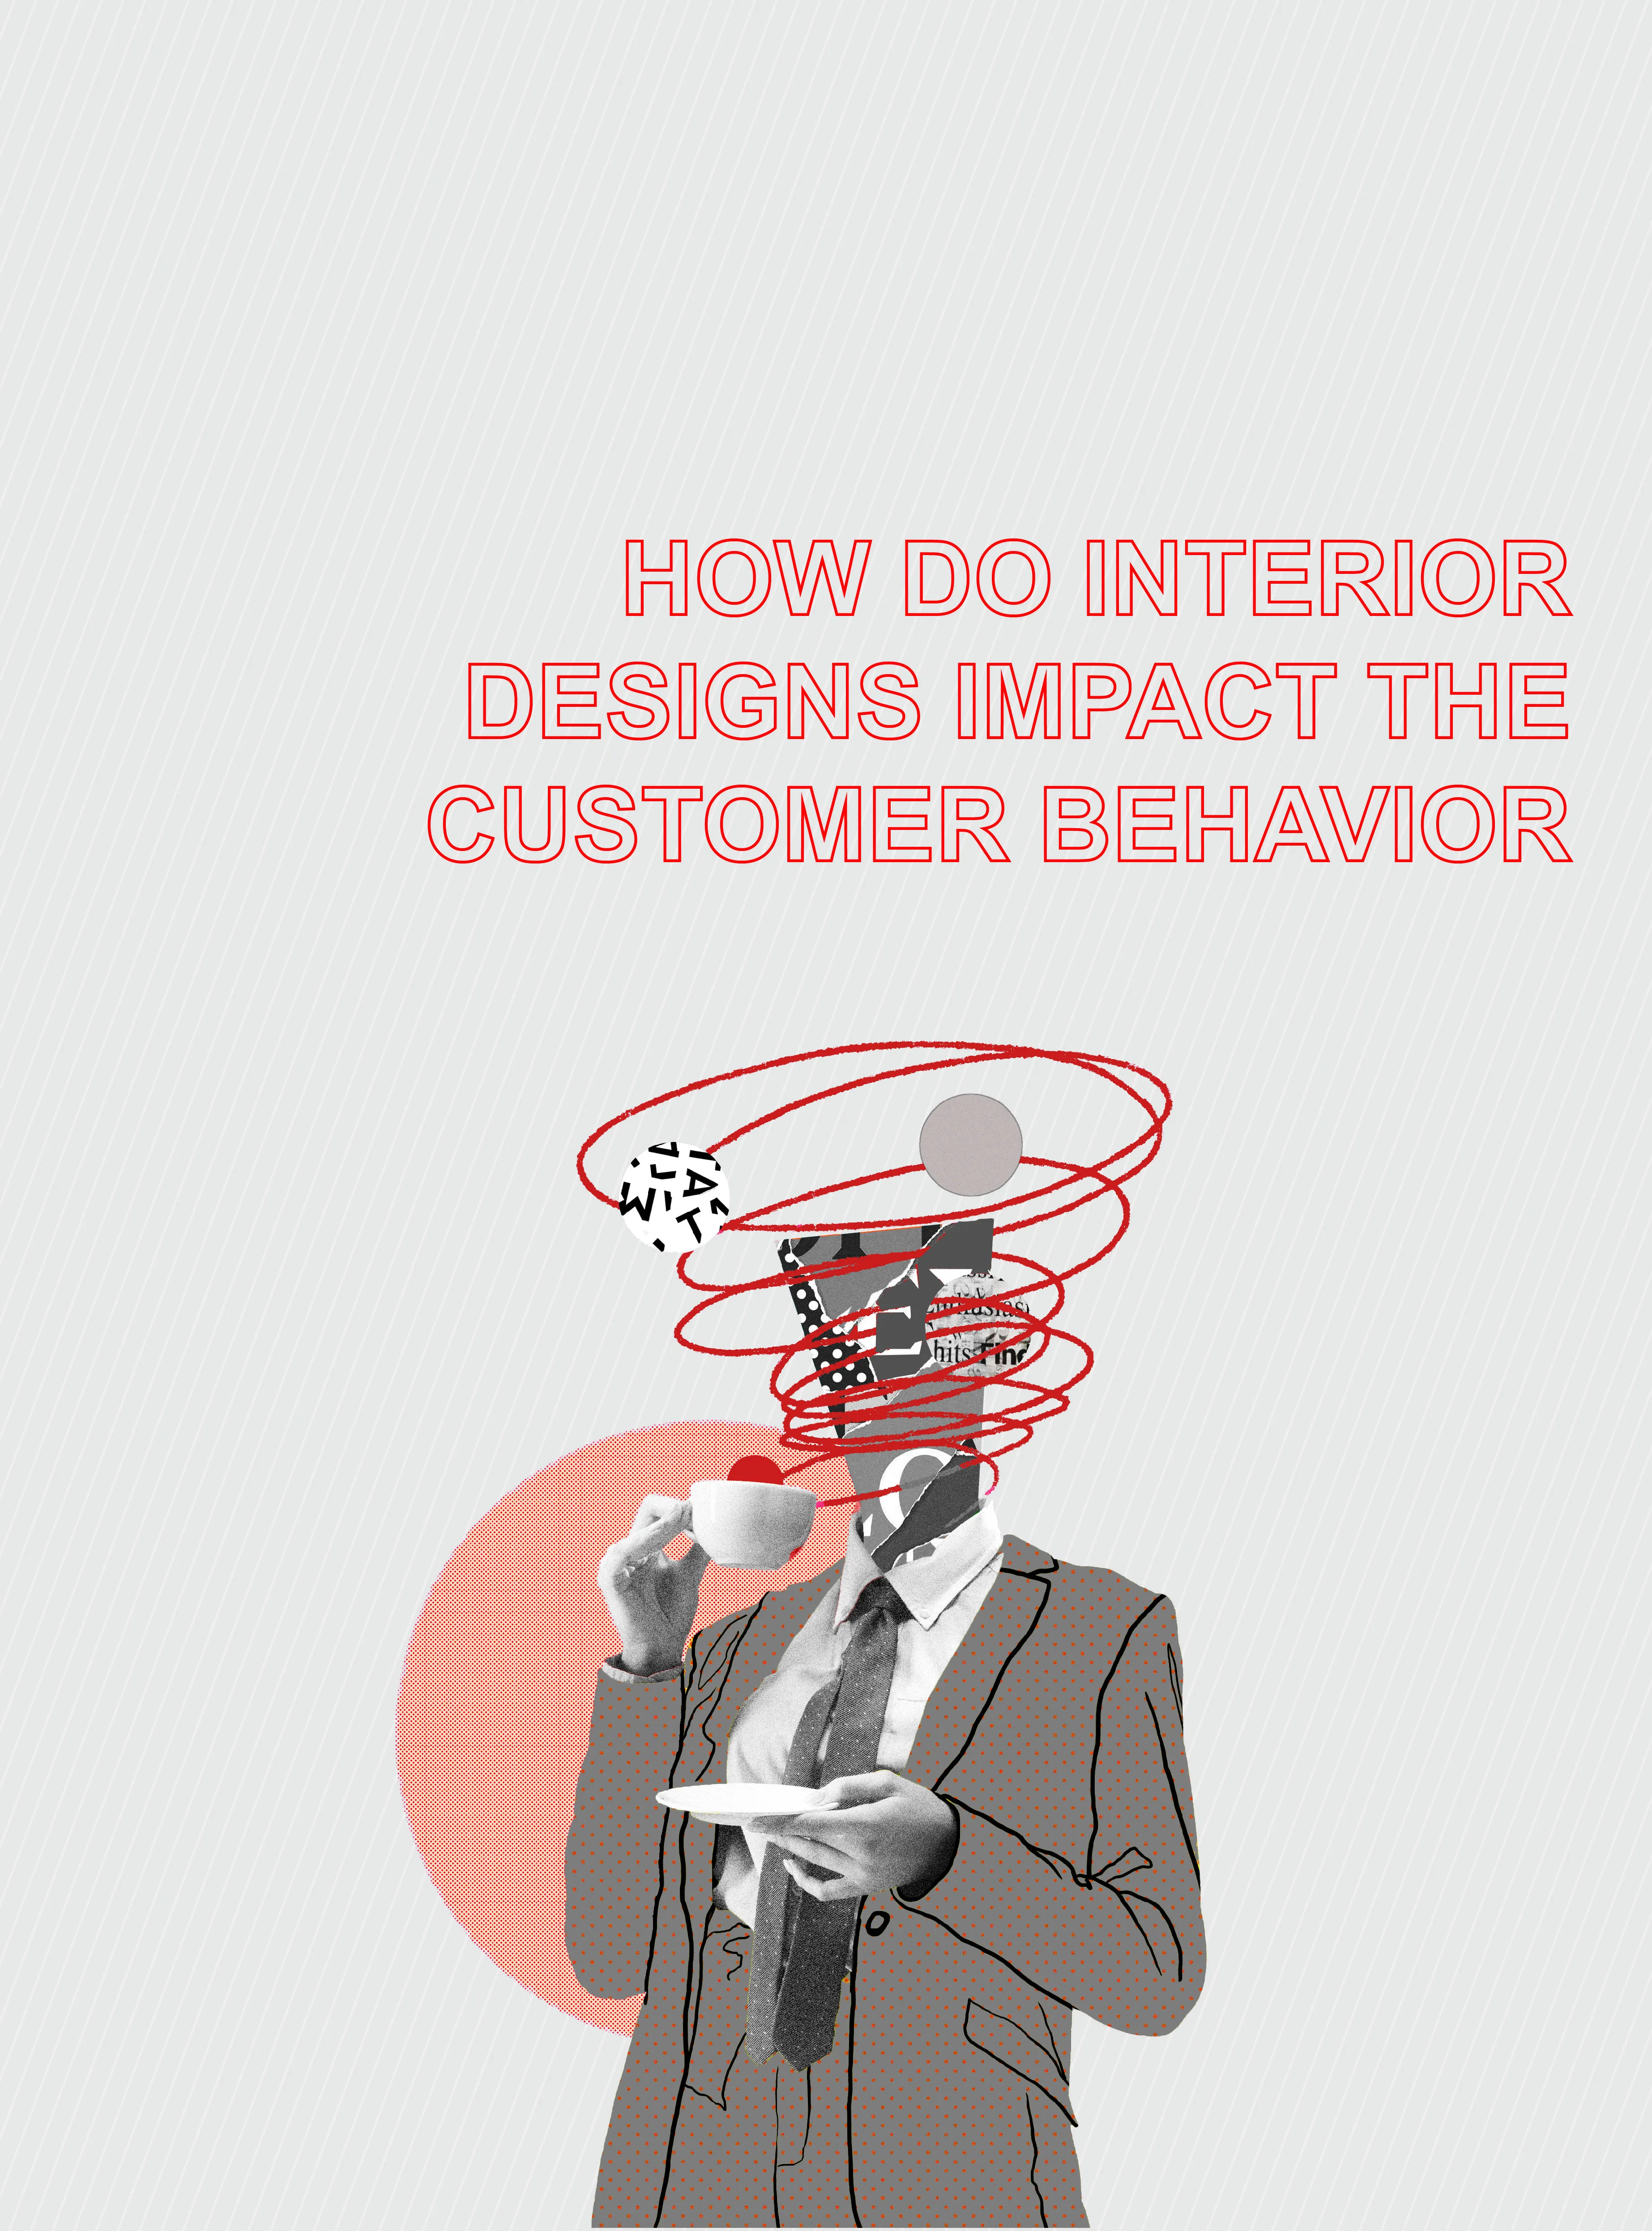 How do interior designs impact the customer behavior